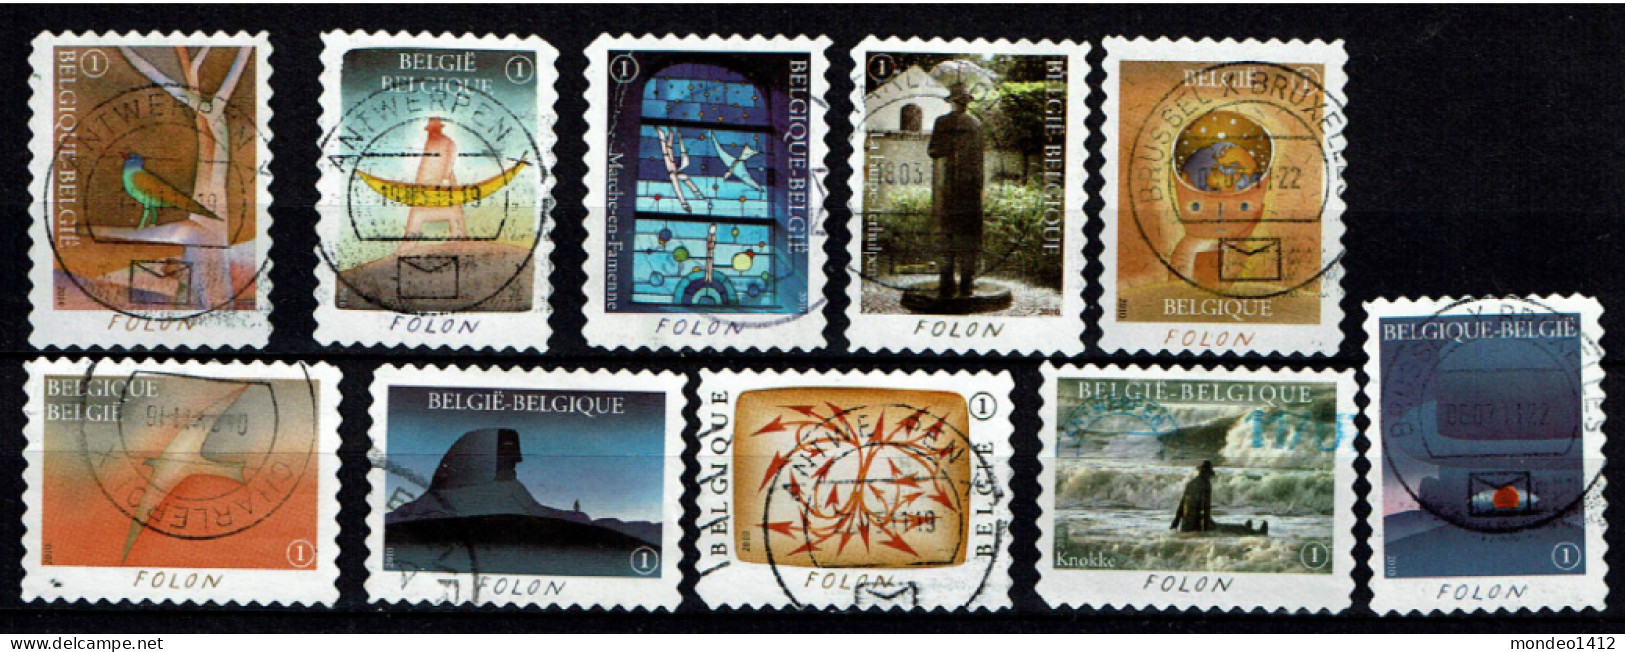 België OBP 4069/4078 - Zegels Uit Boekje B115 - De Magie Van Folon - Used Stamps